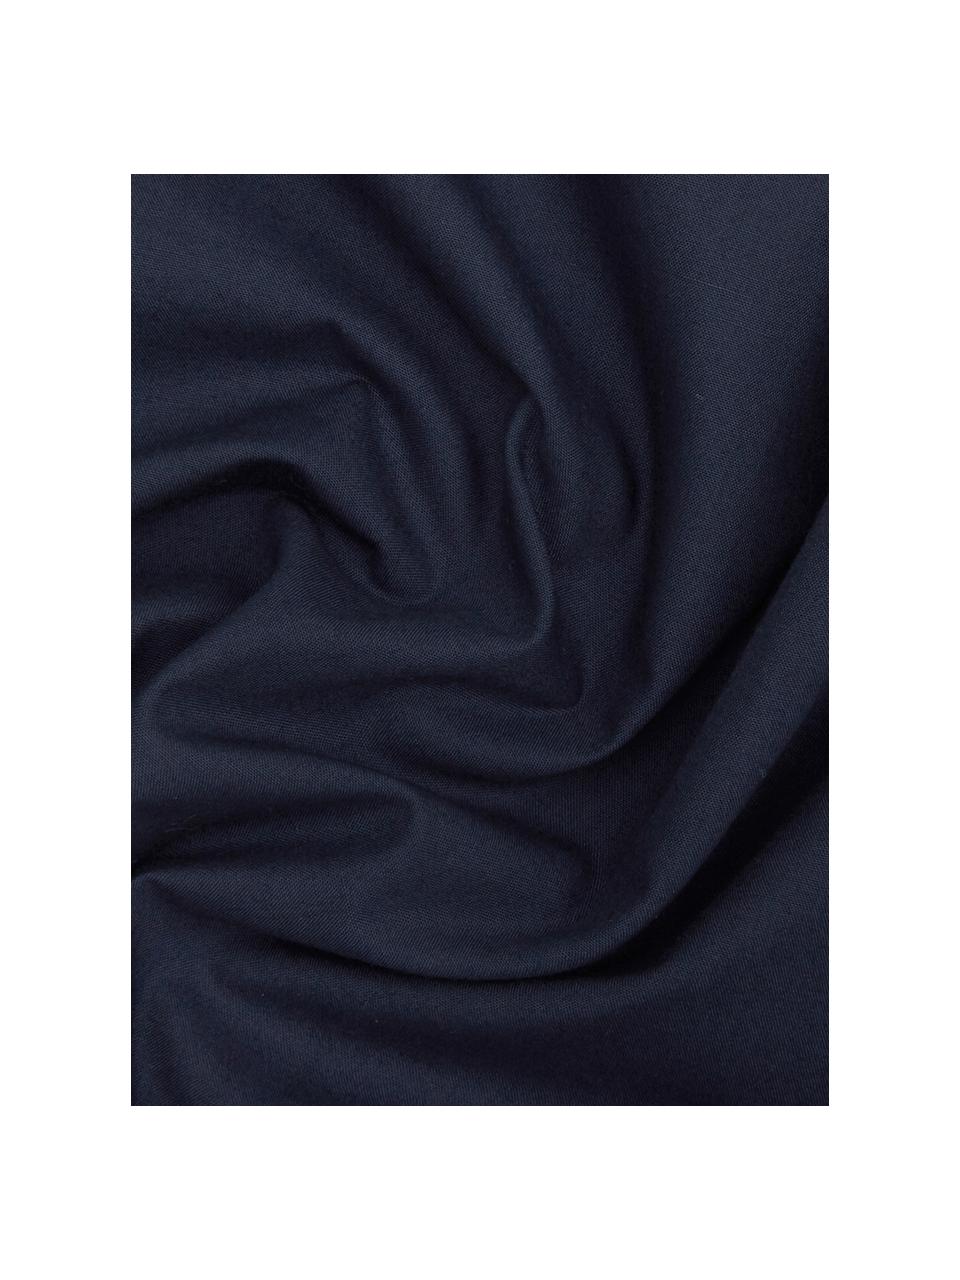 Set lenzuola in percalle blu scuro Elsie, Blu scuro, 240 x 300 cm + 2 federe 50 x 80 cm